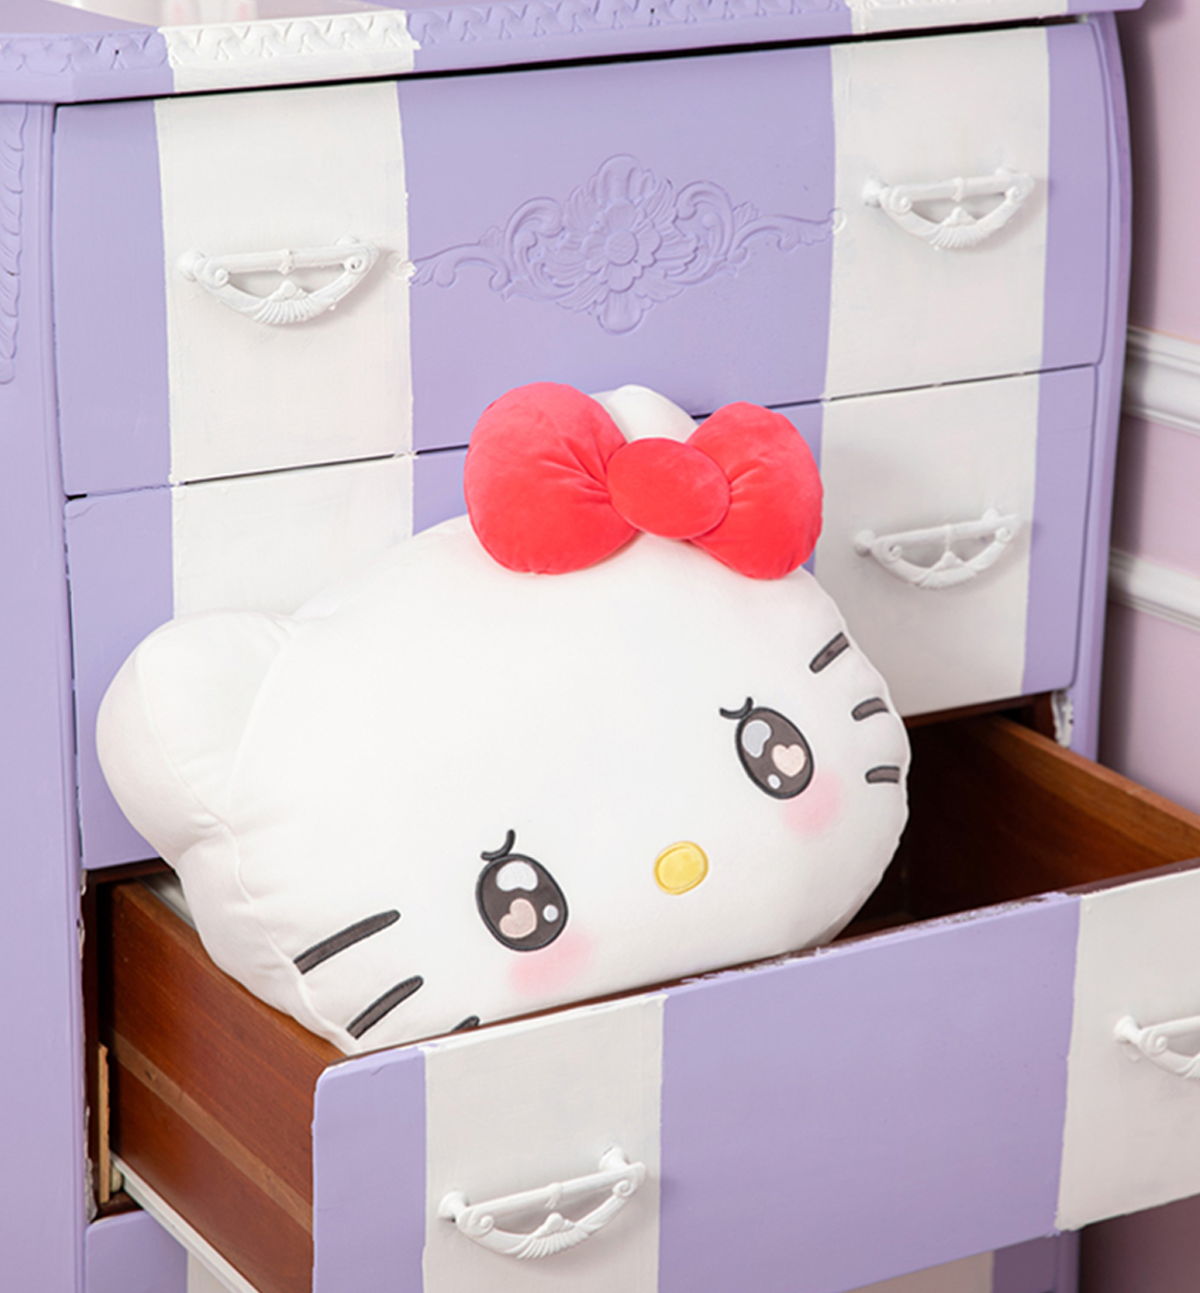 Hello Kitty Face Cushion [Deeply From My Heart]